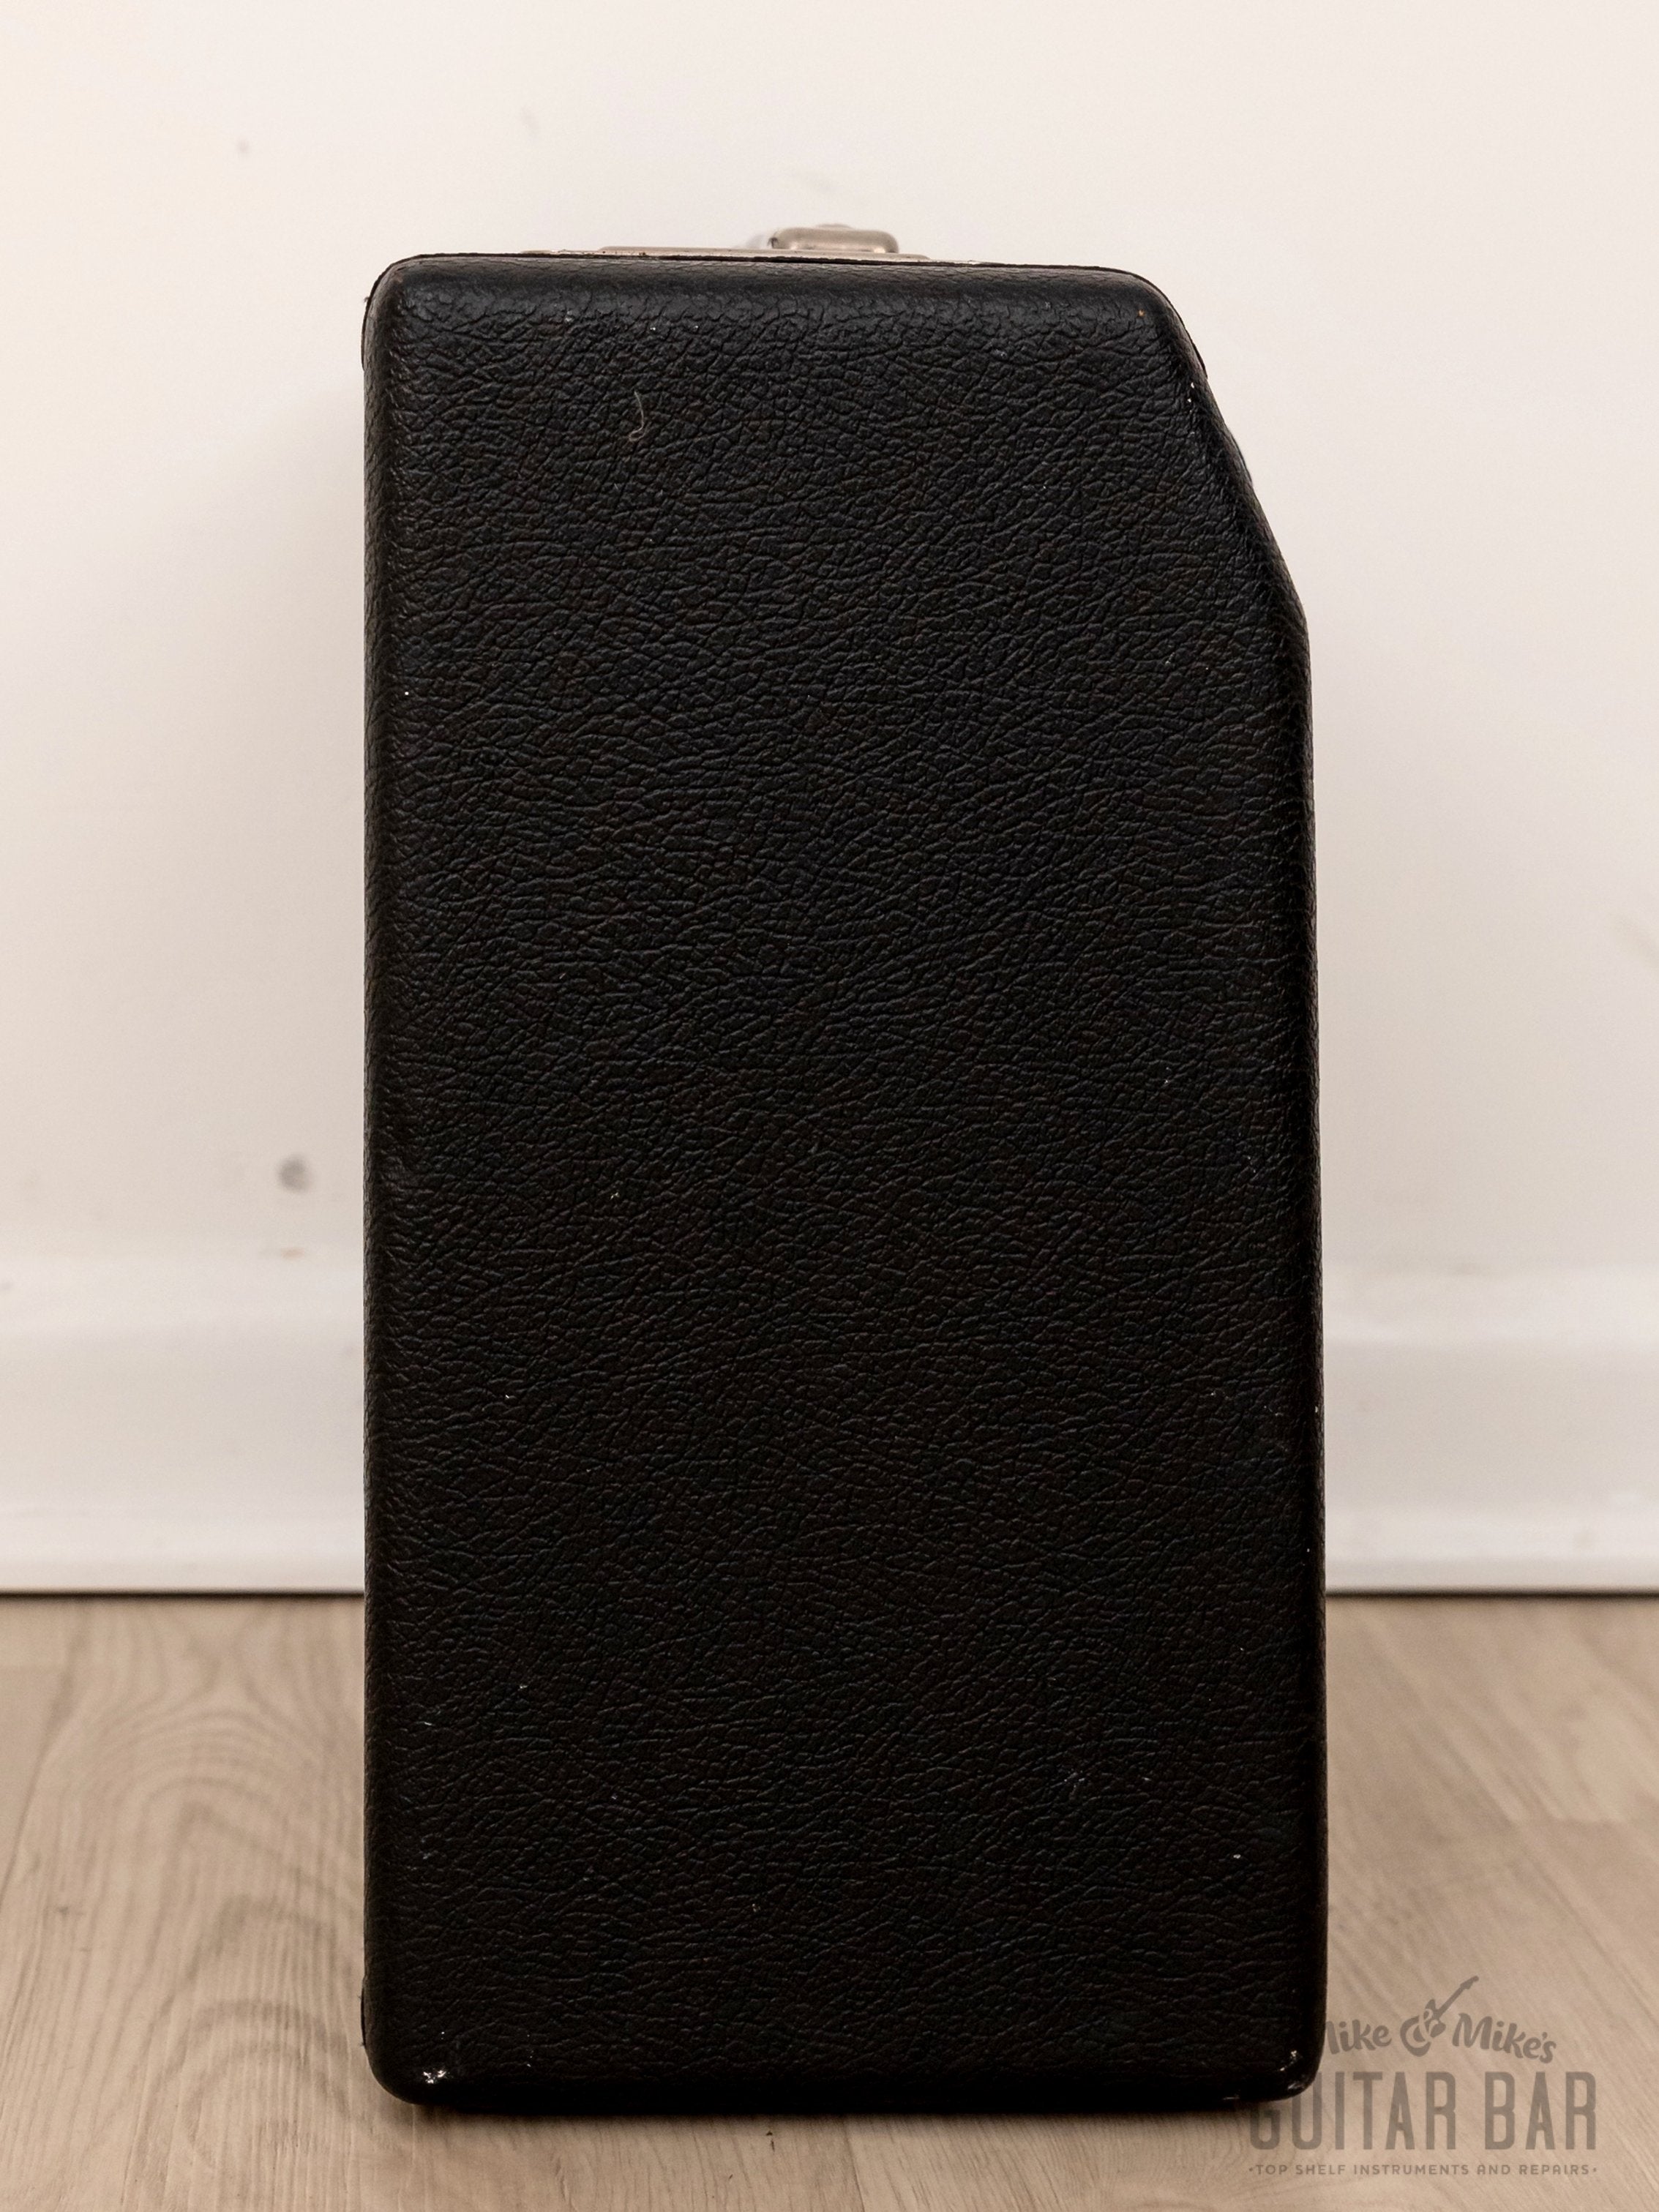 1966 Fender Vibro Champ Vintage Black Panel Tube Amp 1x8, Class A